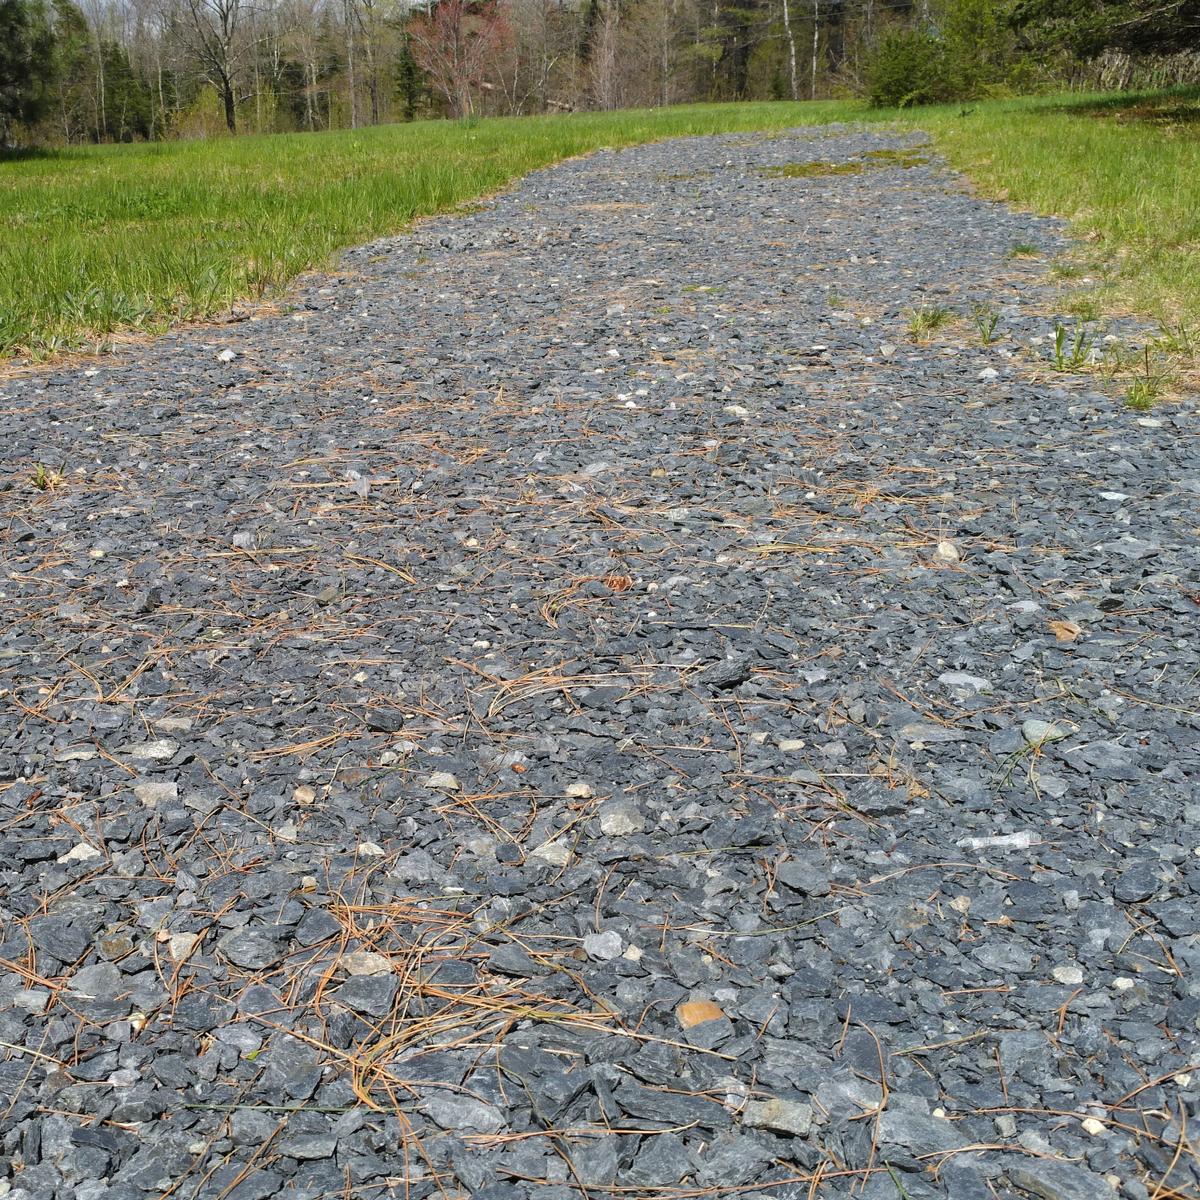 A wide gravel path